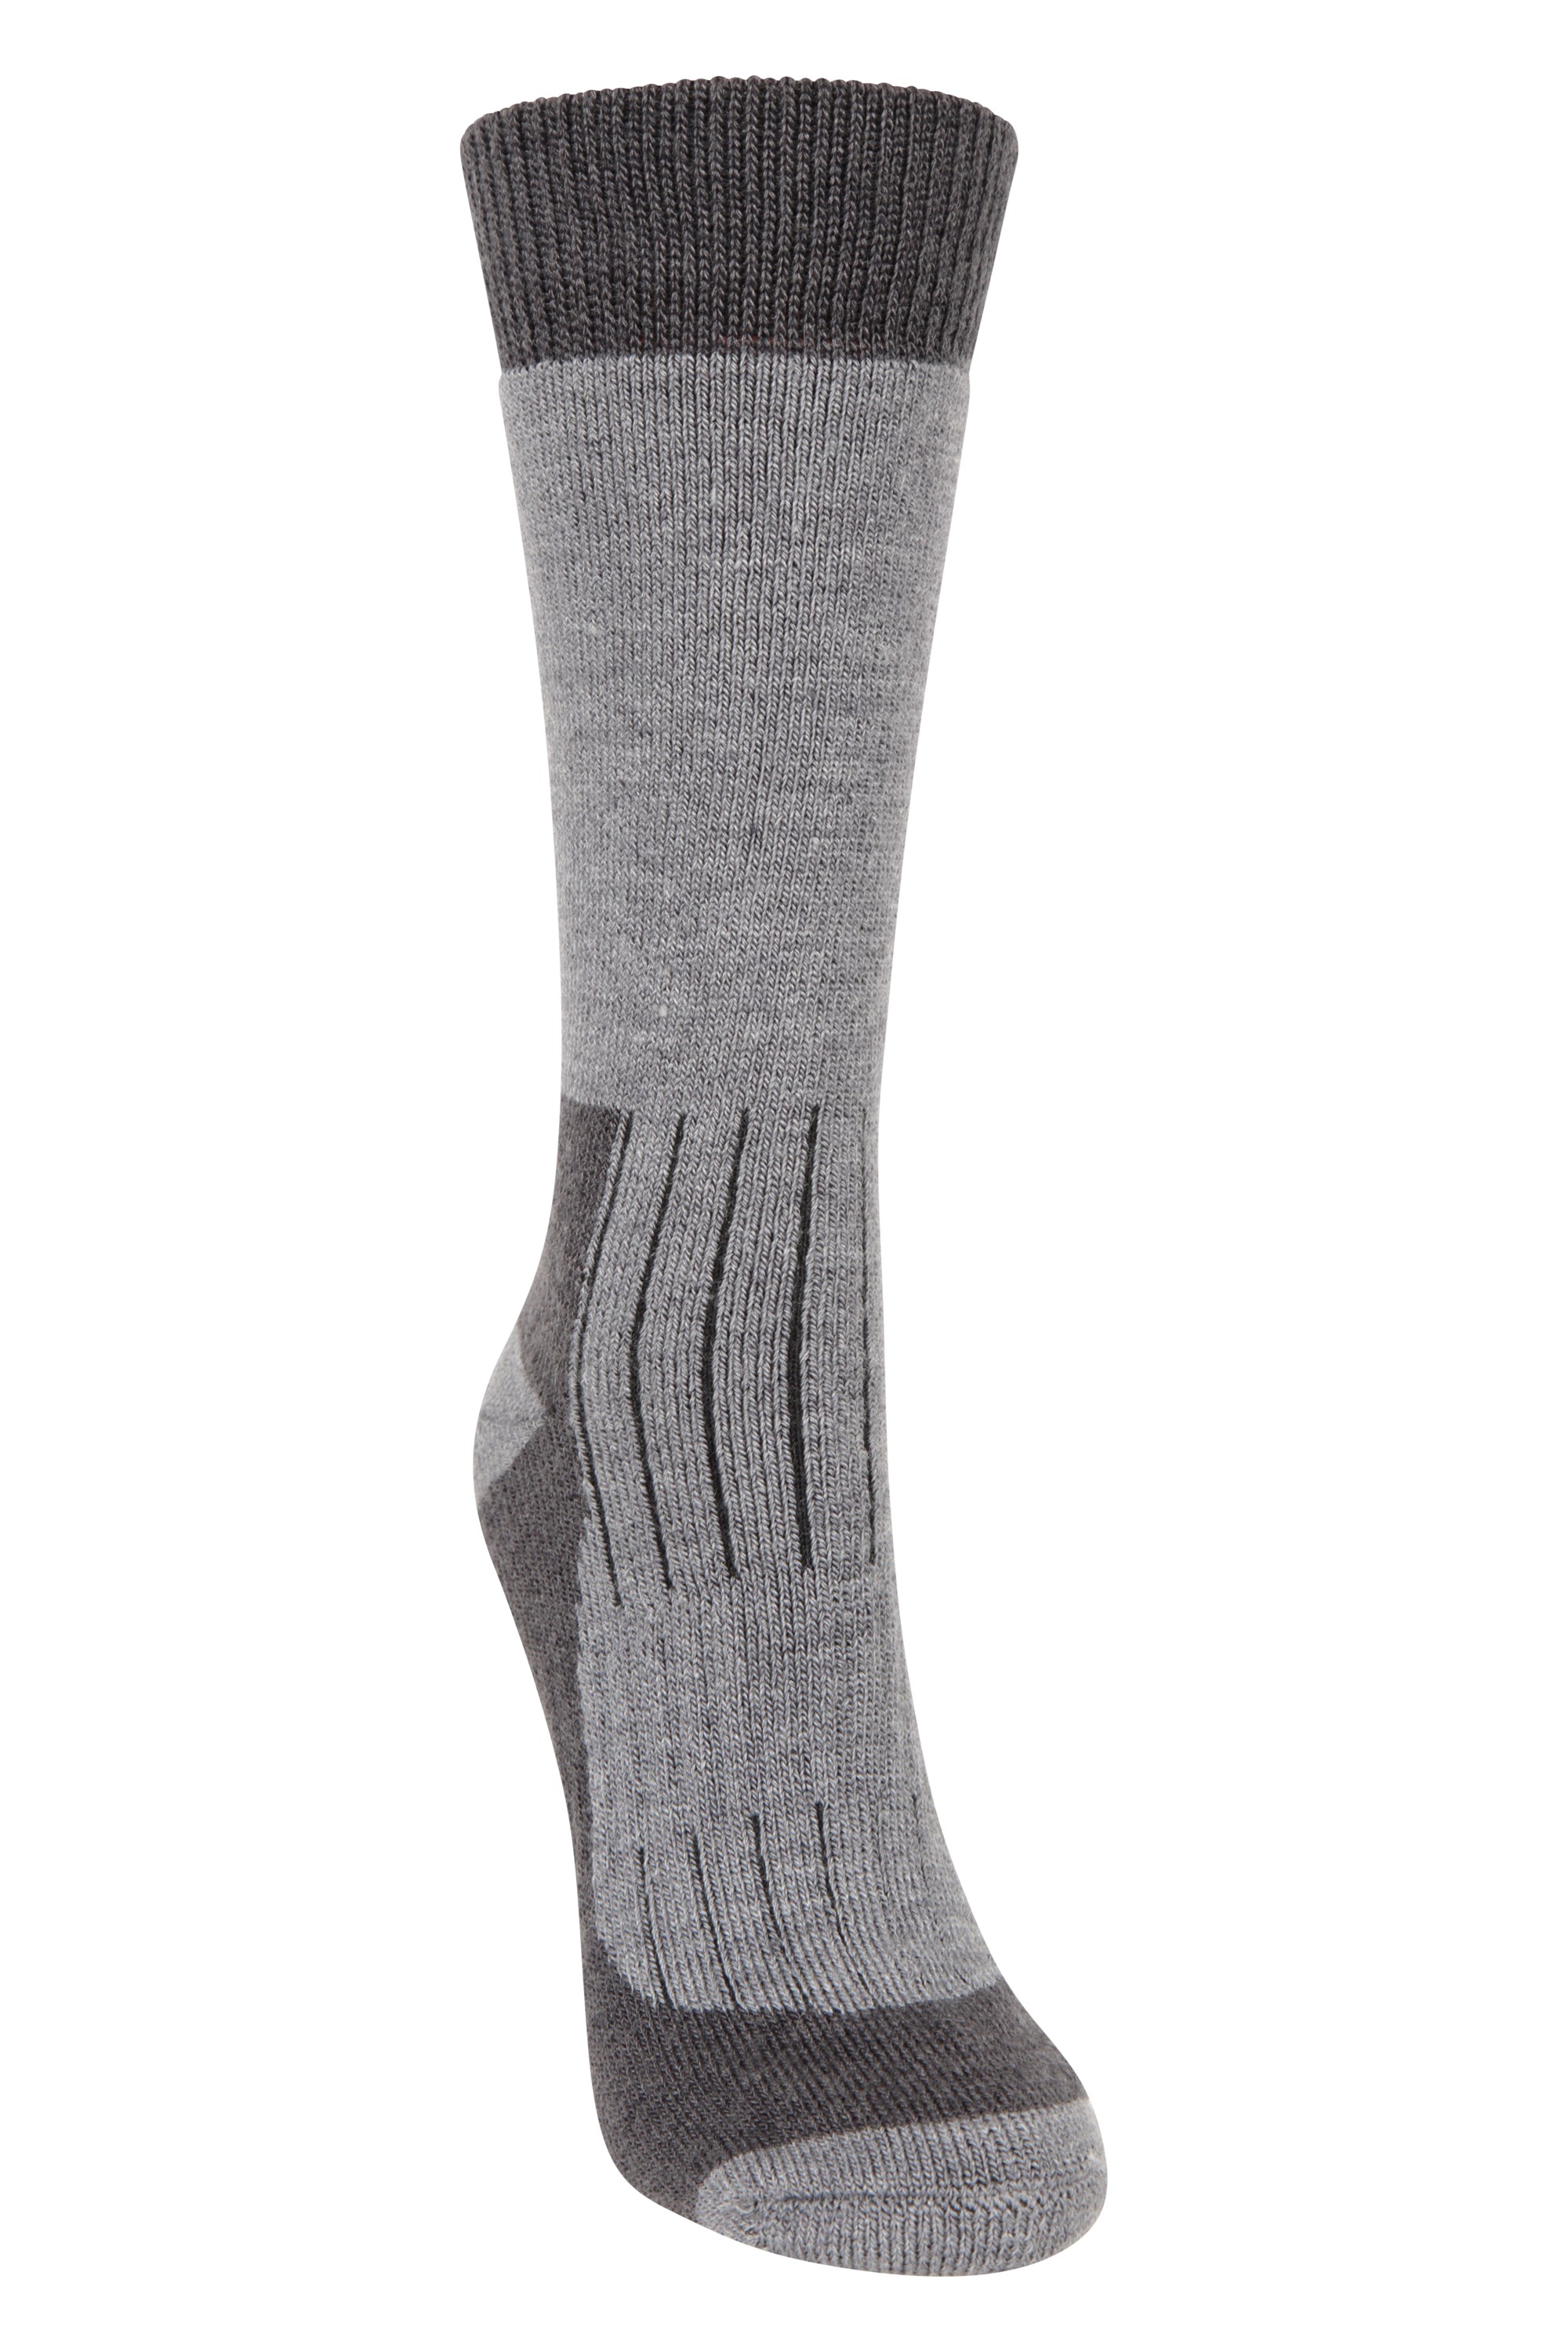 Explorer Womens Merino Thermal Mid-Calf Socks - Grey